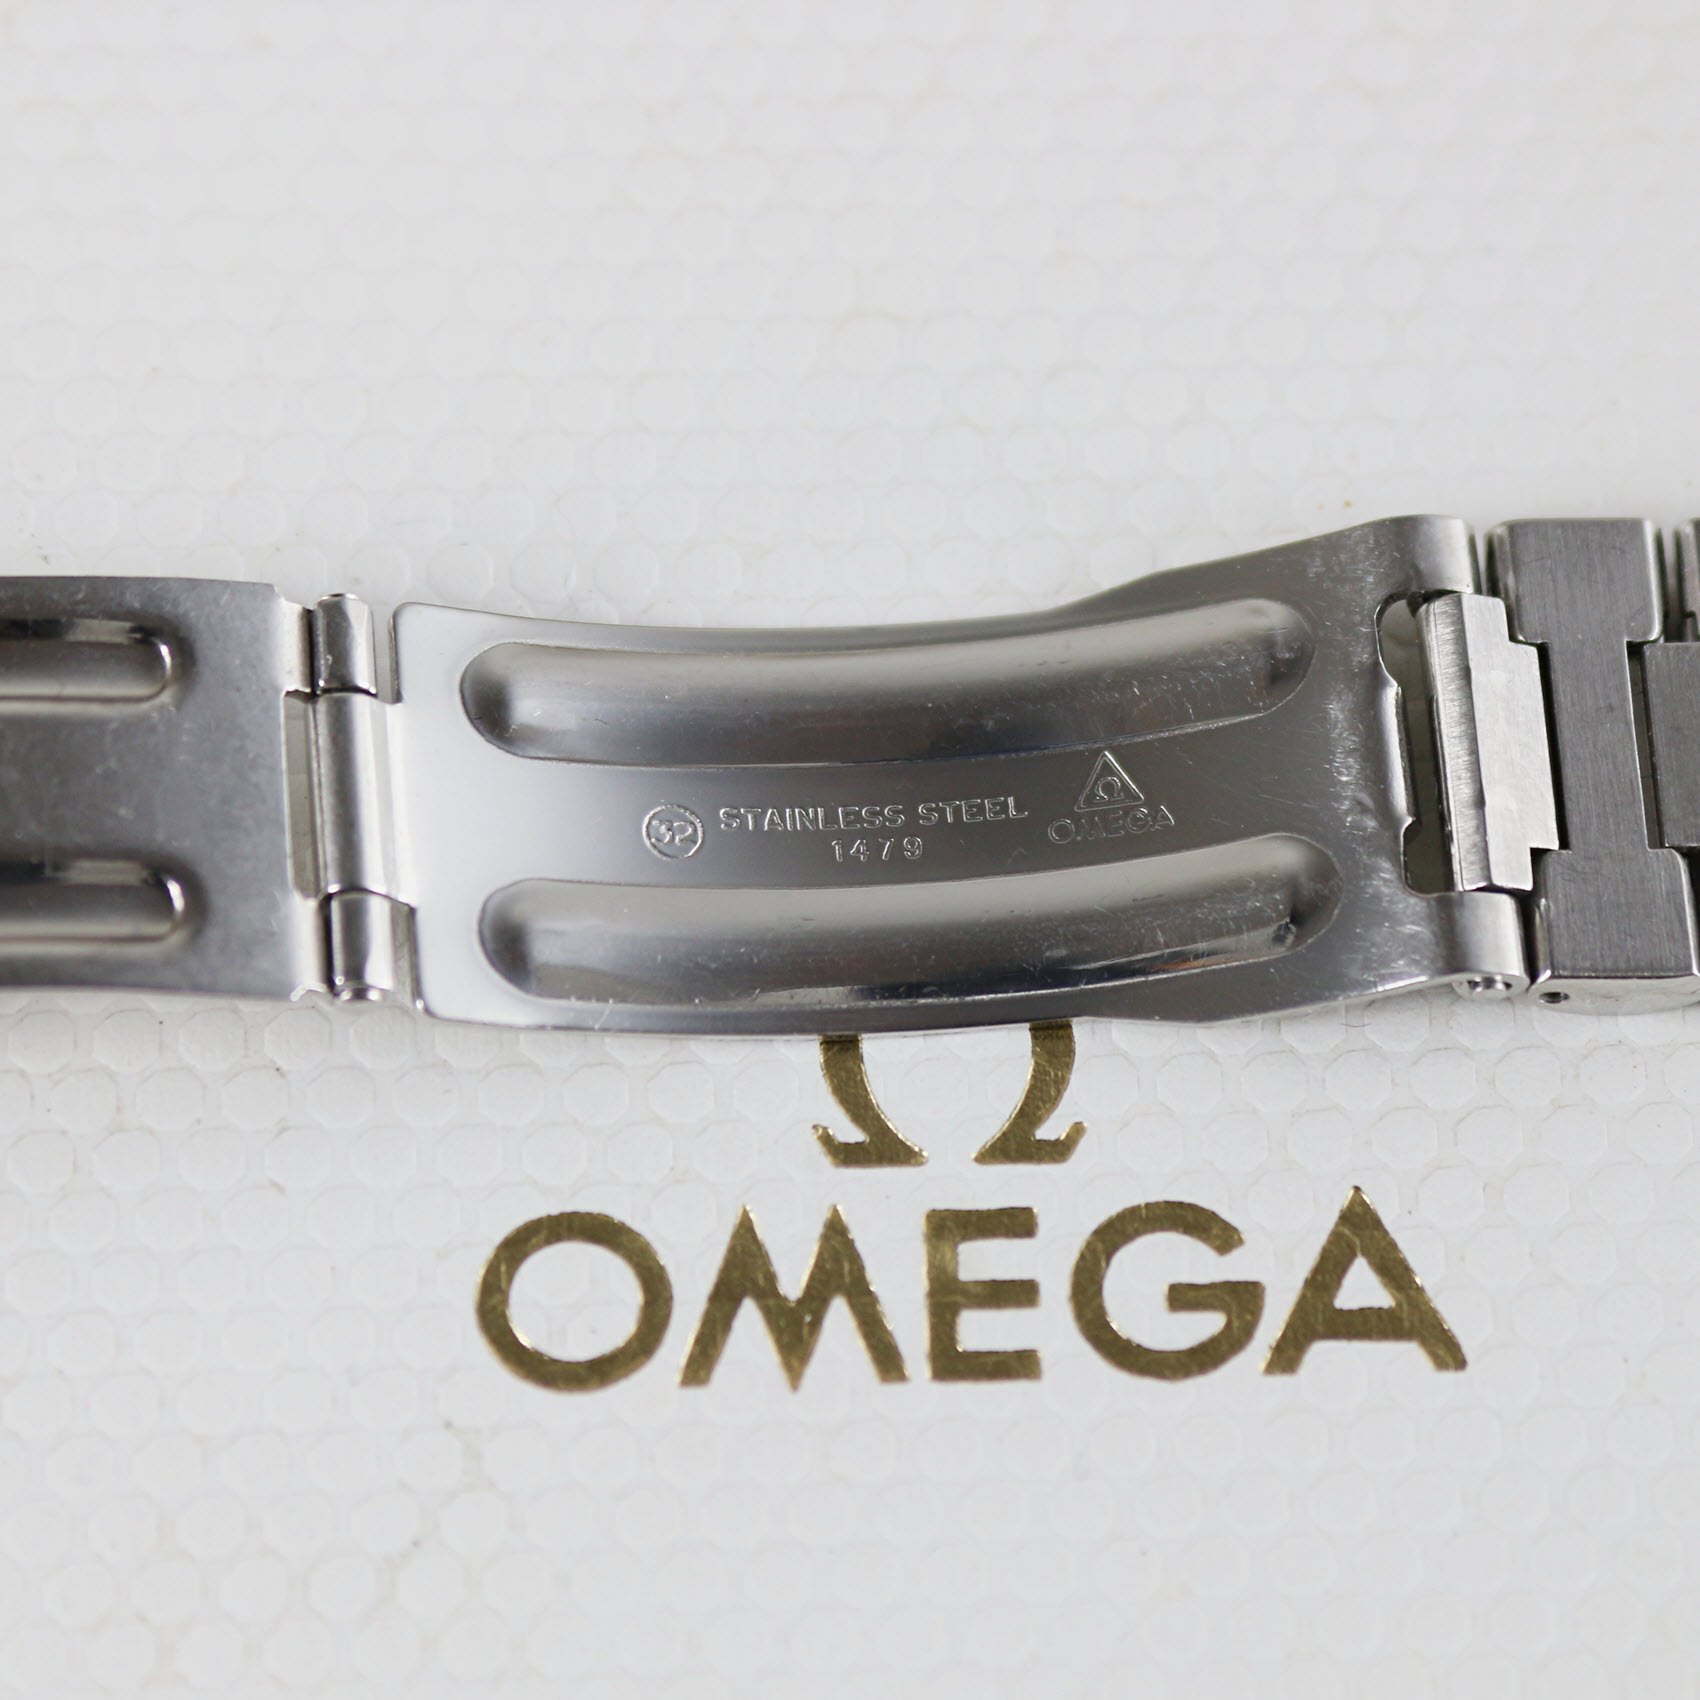 Omega Speedmaster Professional 3590.50 sn 48278216